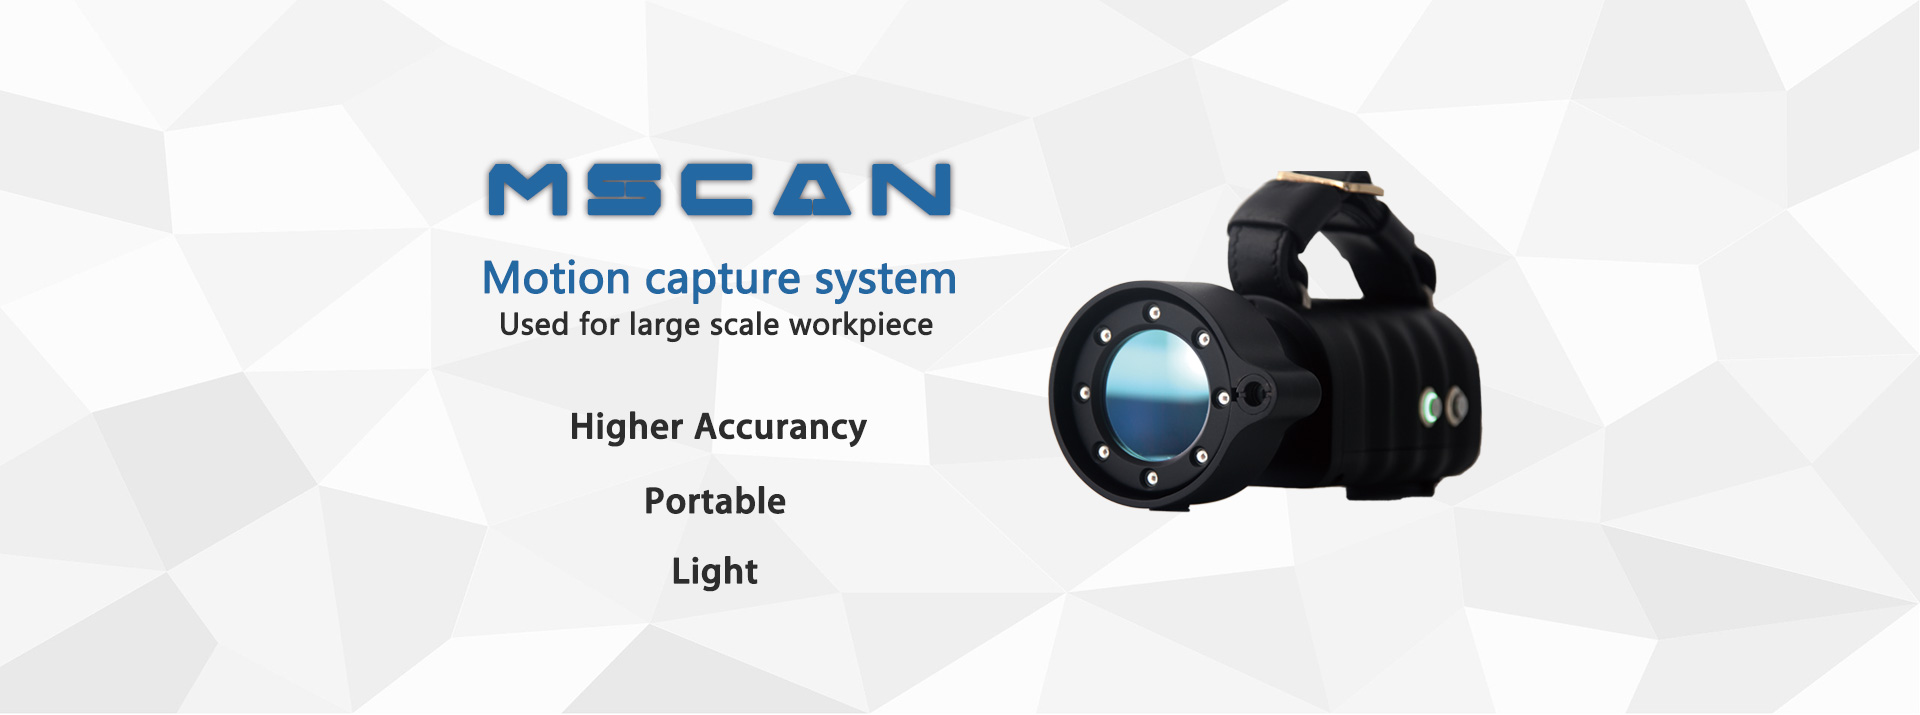 MSCAN photogrammetry system